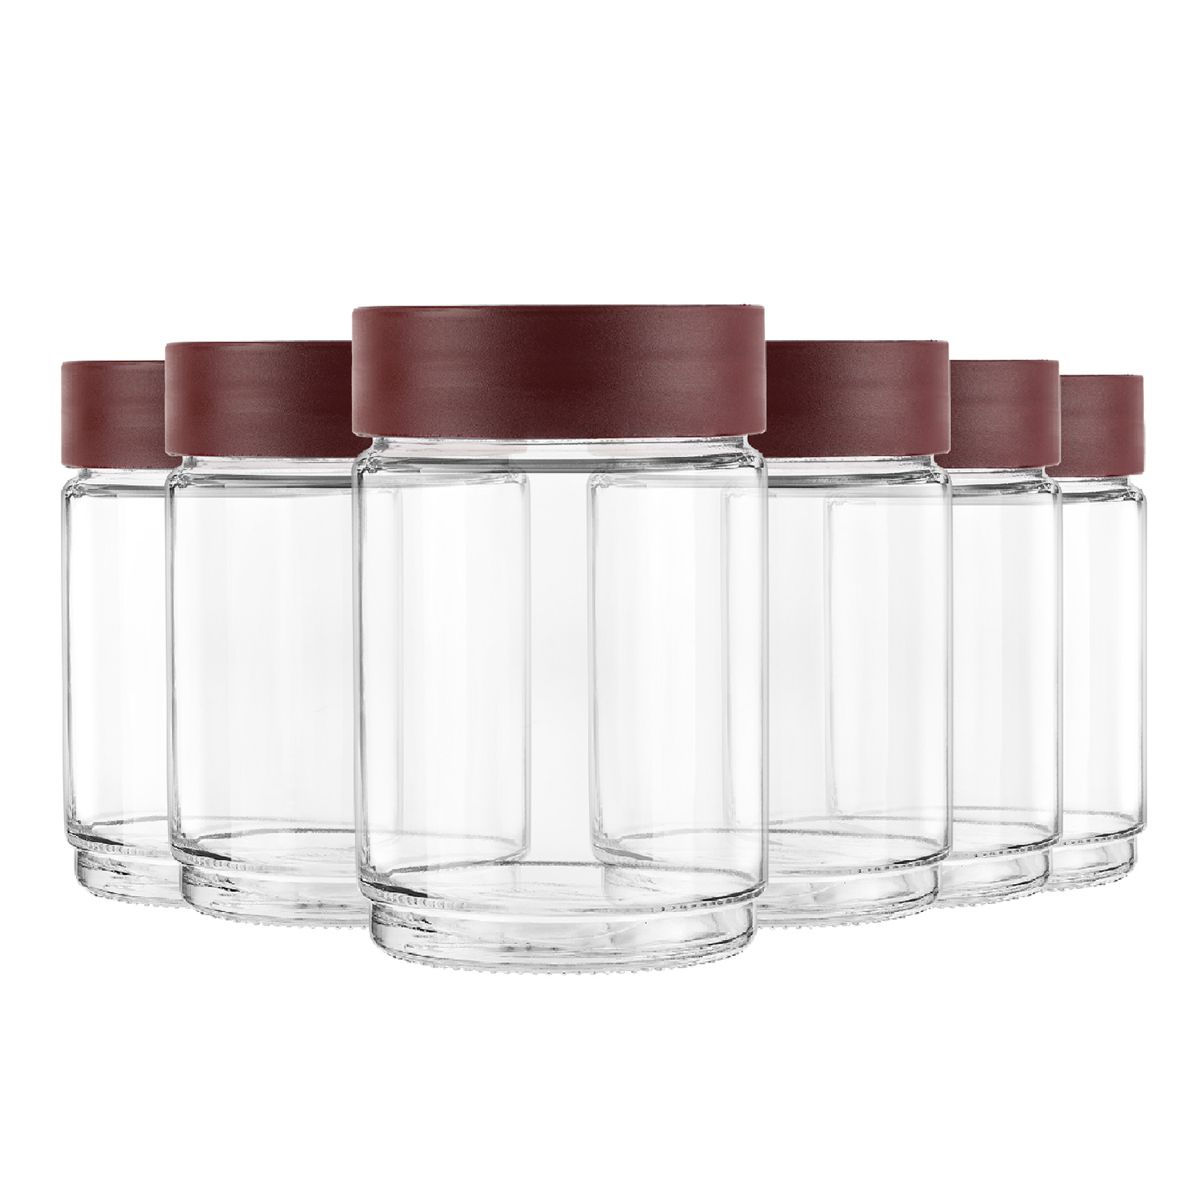 Modustack Glassy Storage Jar, 1500ml, Set of 6 Maroon / 1500ml